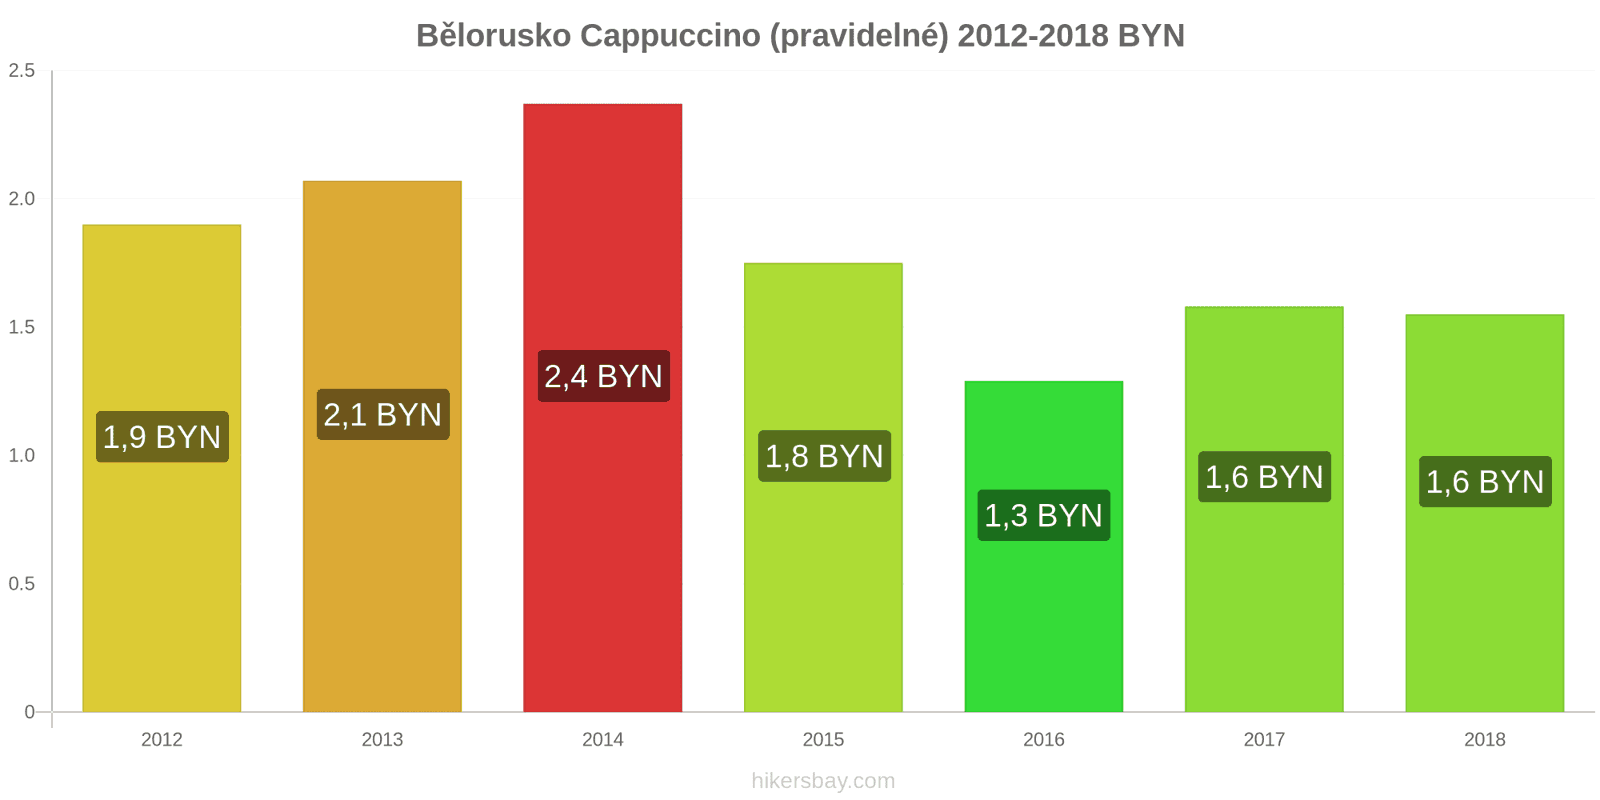 Bělorusko změny cen Cappuccino hikersbay.com